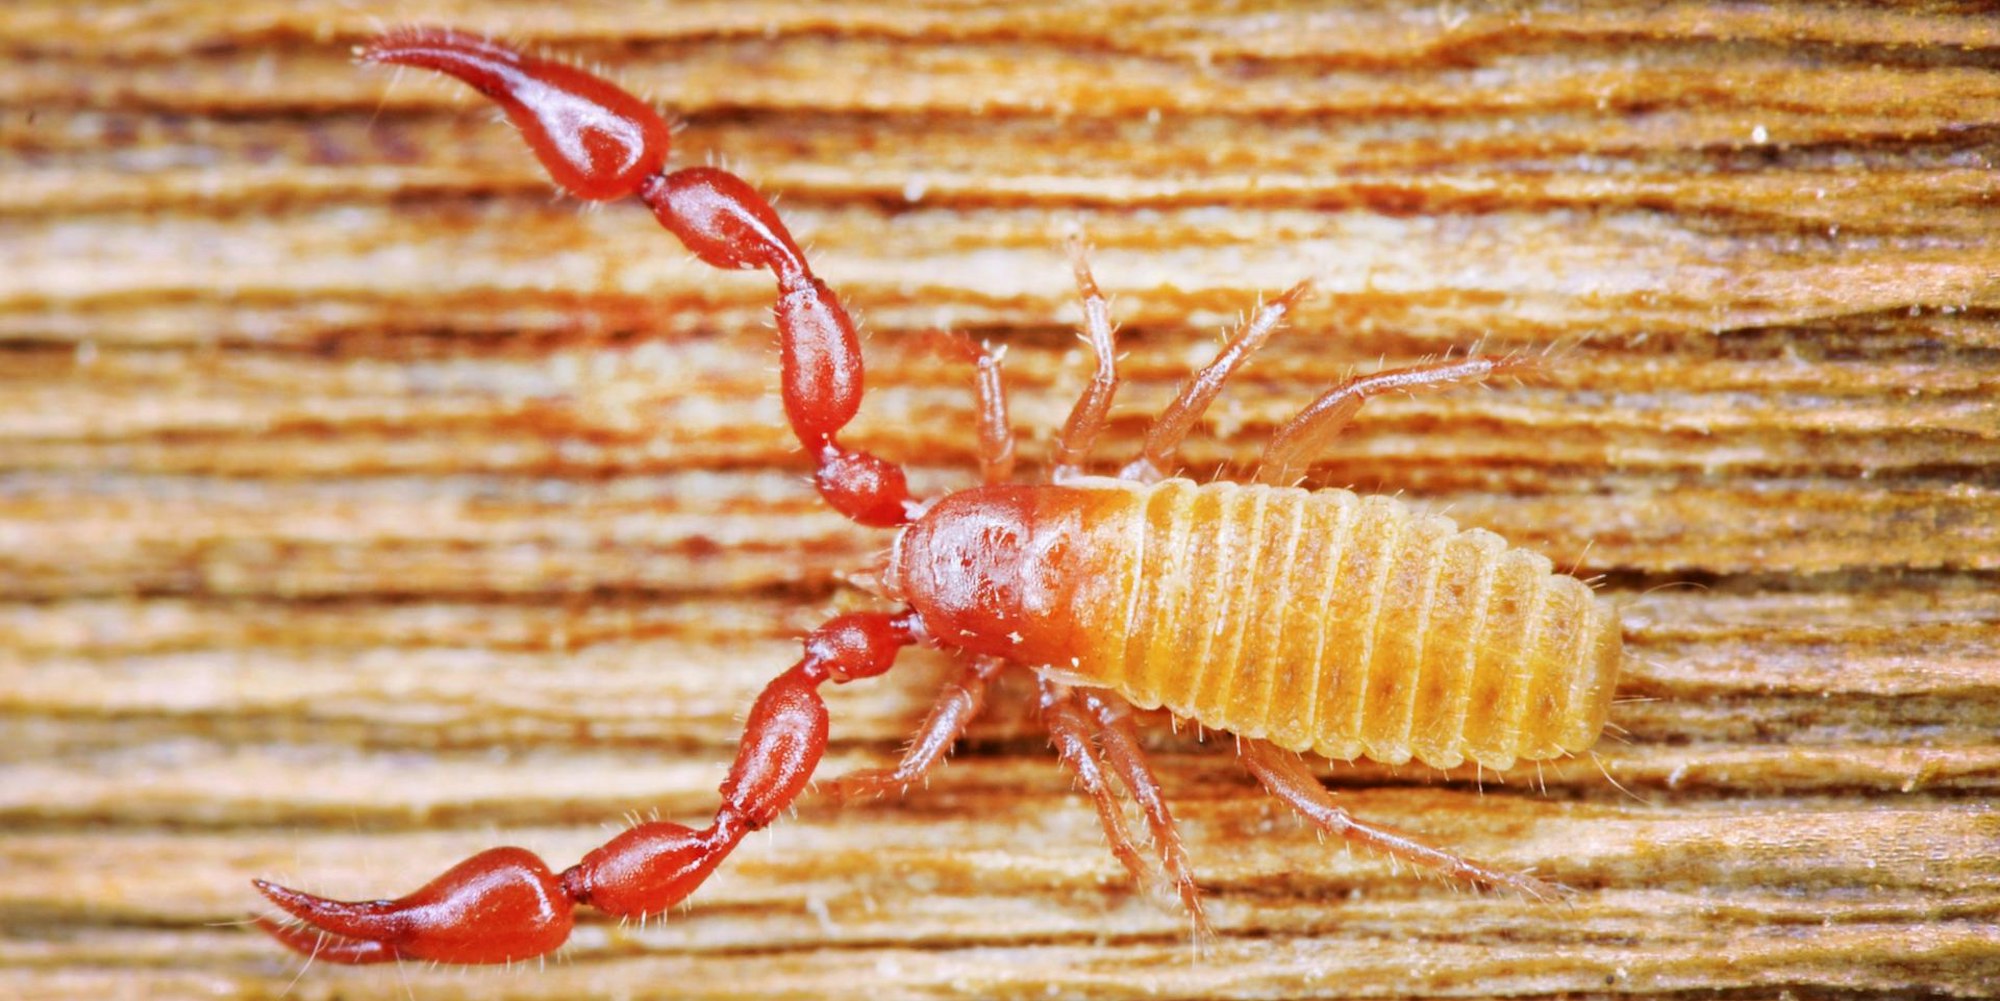 skorpion entdeckt